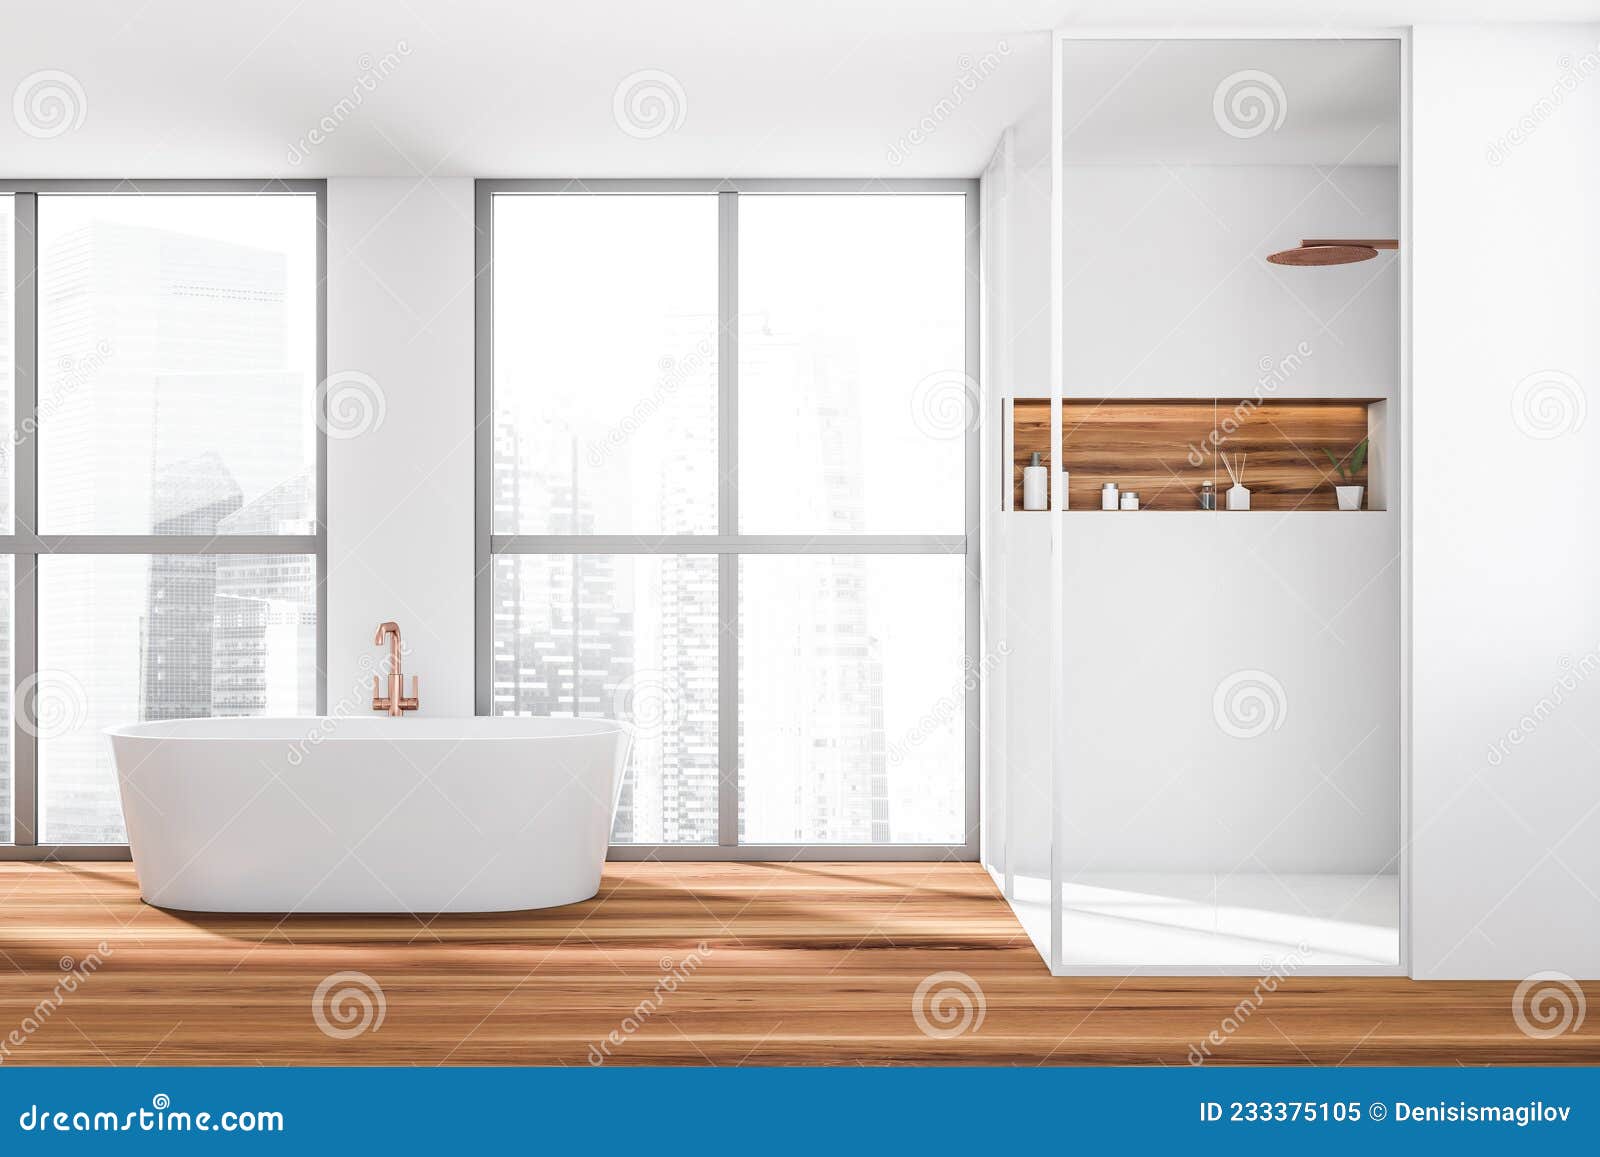 Bright Bathroom Interior with Bathtub, Shower, Panoramic Window Stock ...